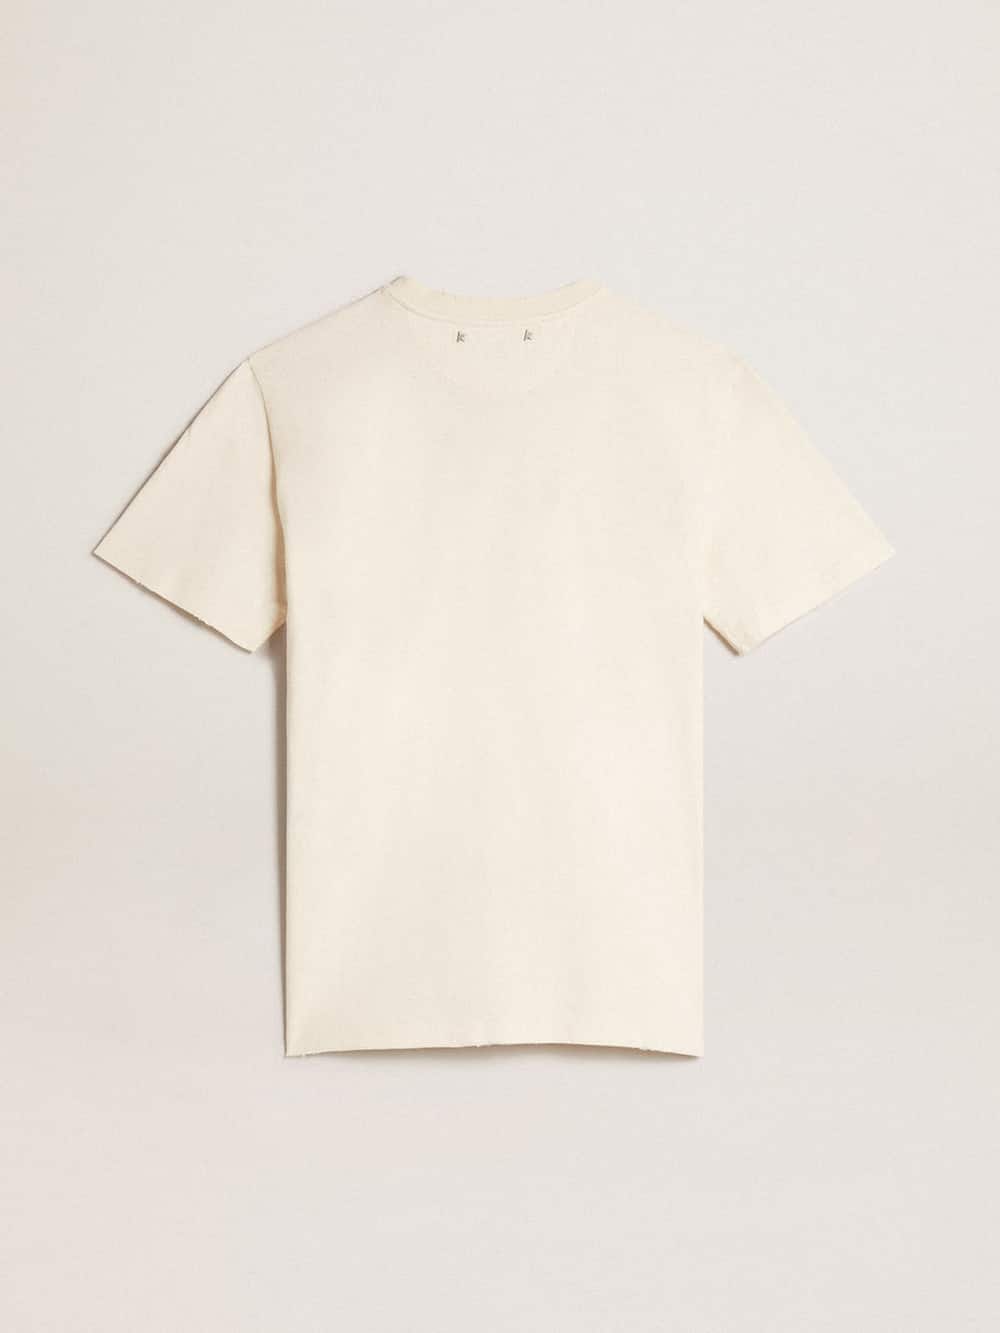 Golden Goose - T-shirt in cotone color bianco vissuto con logo stagionale in 